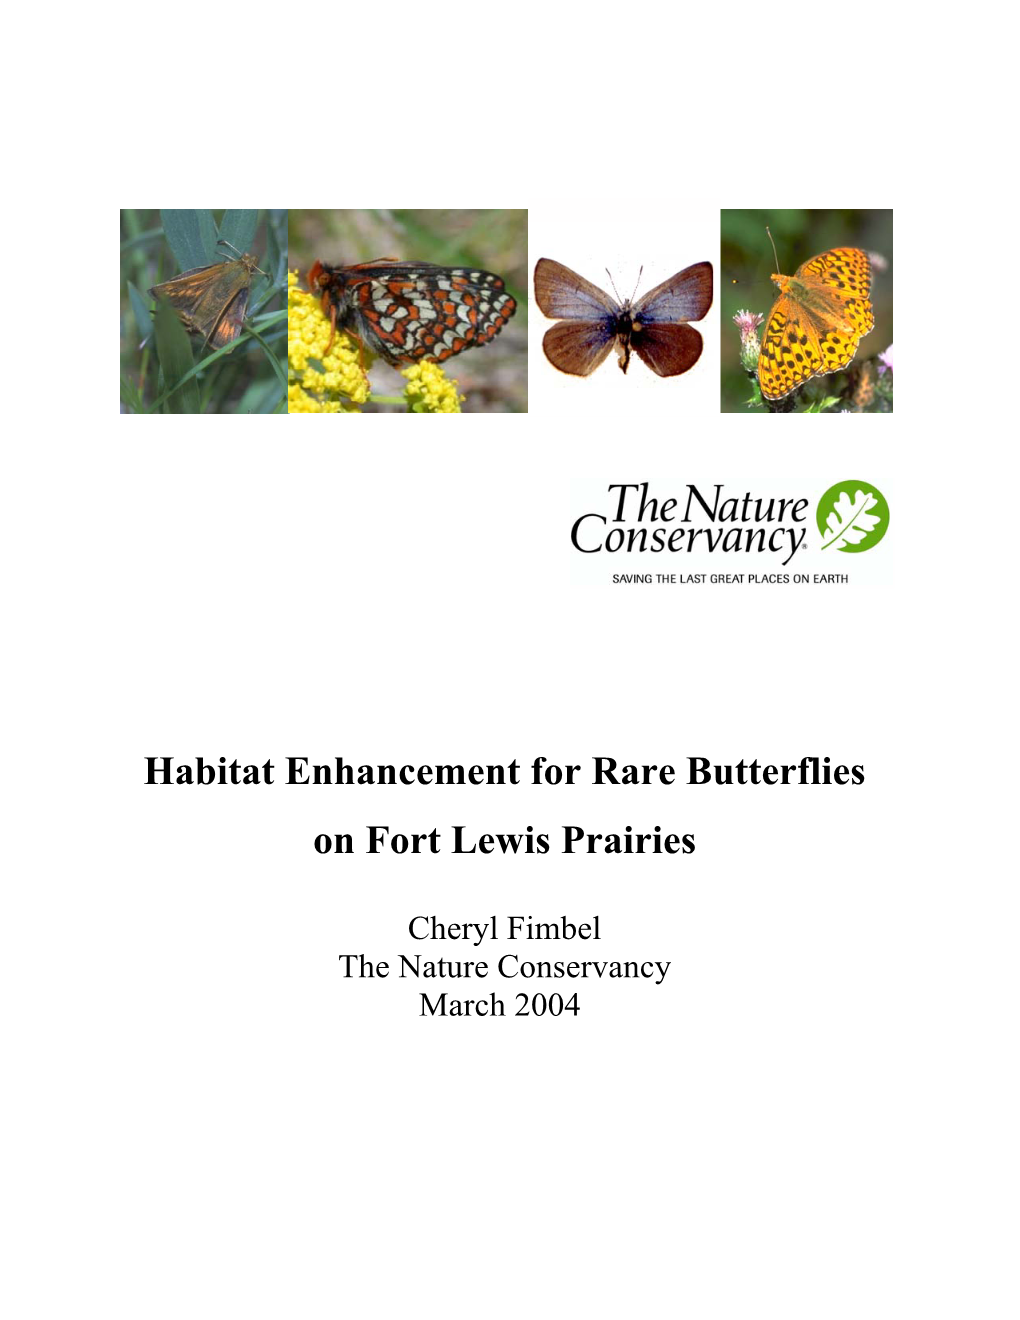 Habitat Enhancement for Rare Butterflies on Fort Lewis Prairies